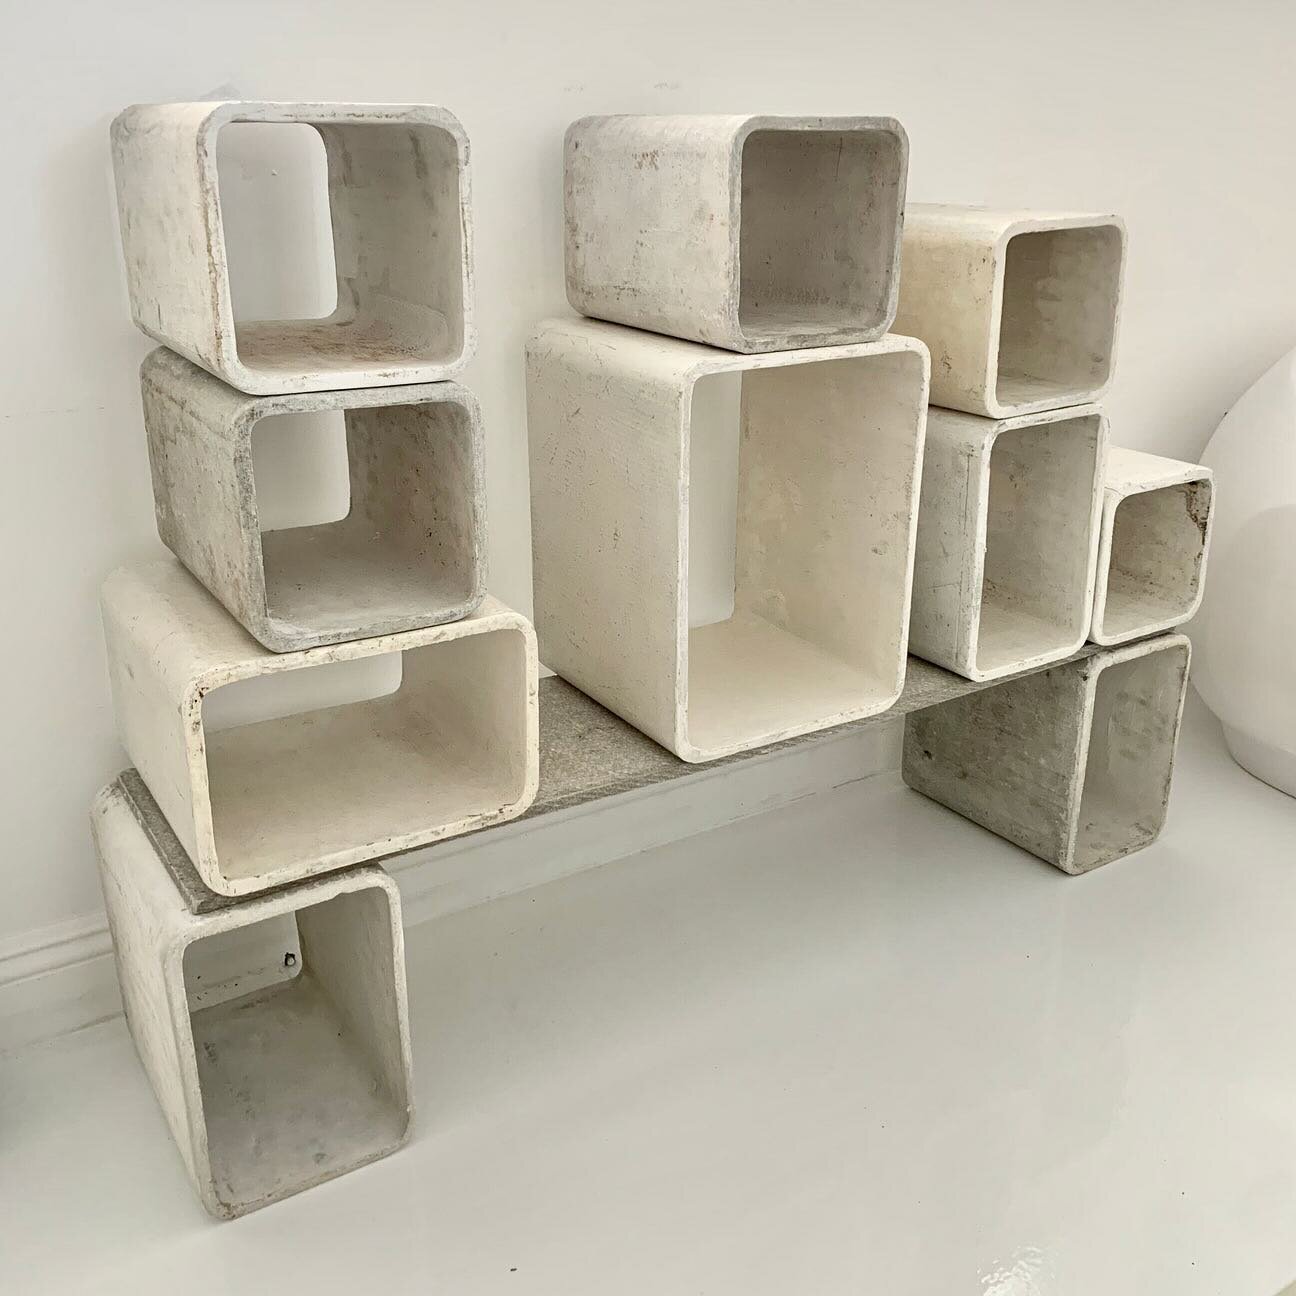 willy guhl modular concrete cubes, 1960s switzerland